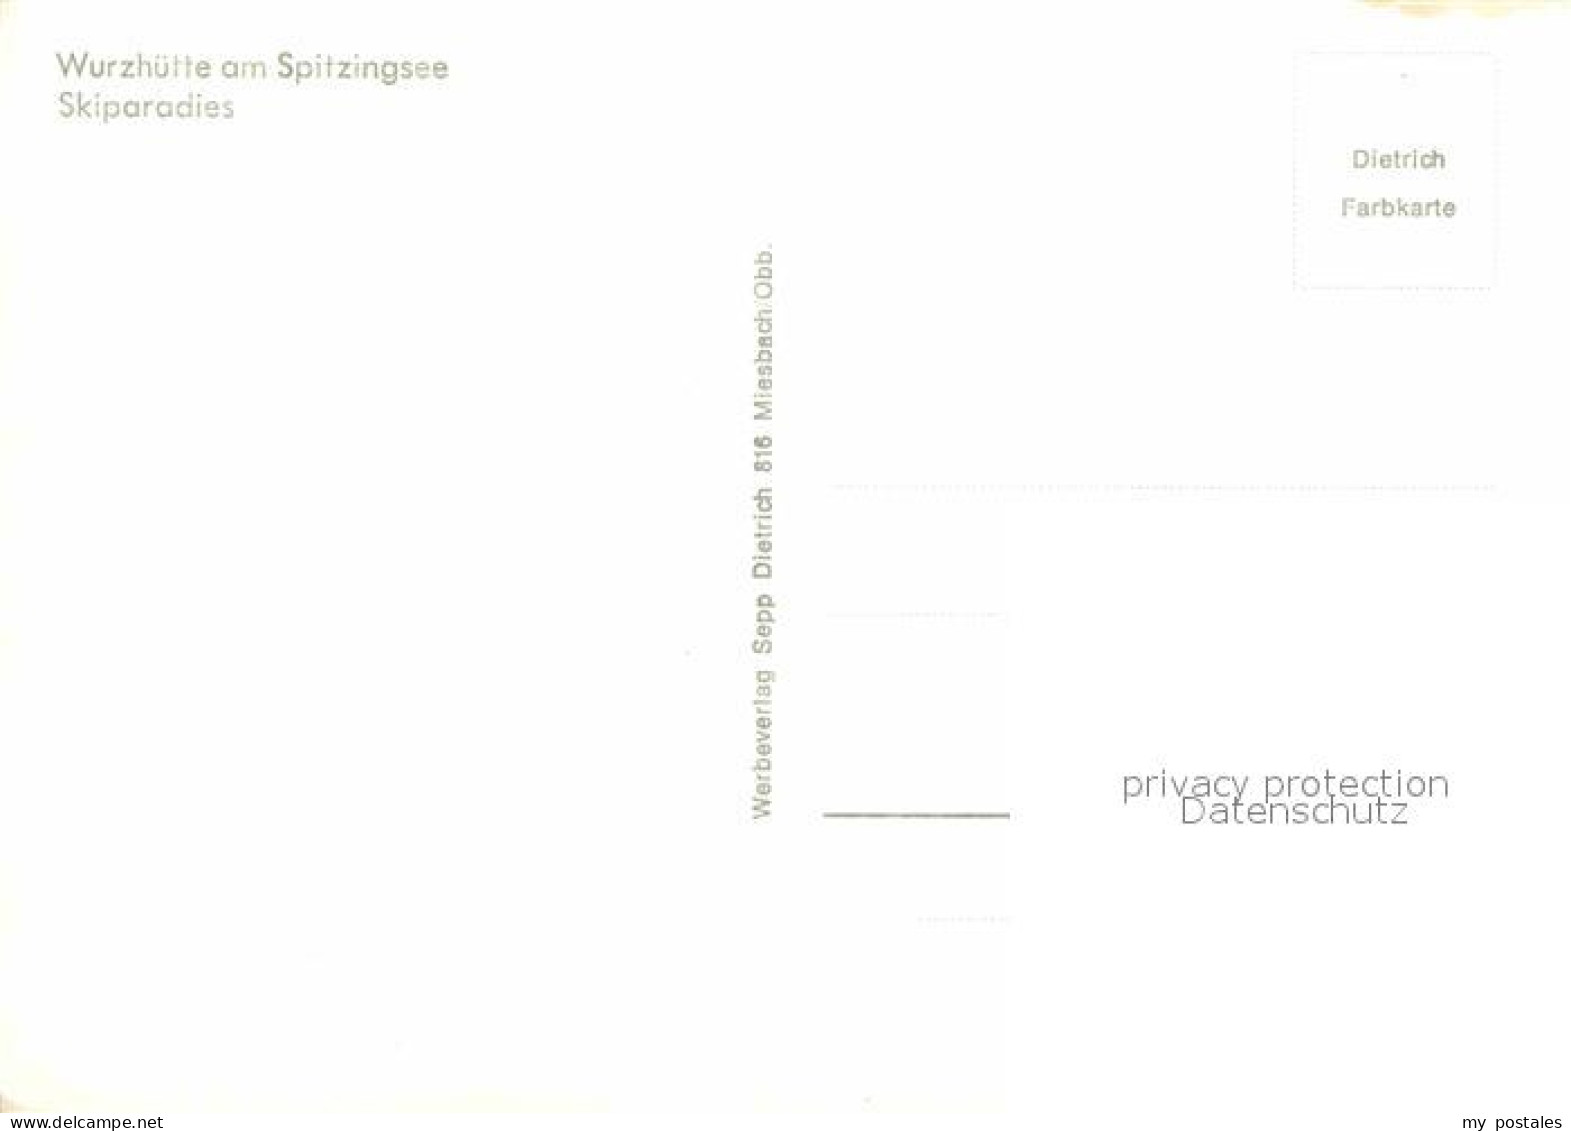 72620557 Spitzingsee Wurzhuette Skiparadies Schliersee - Schliersee